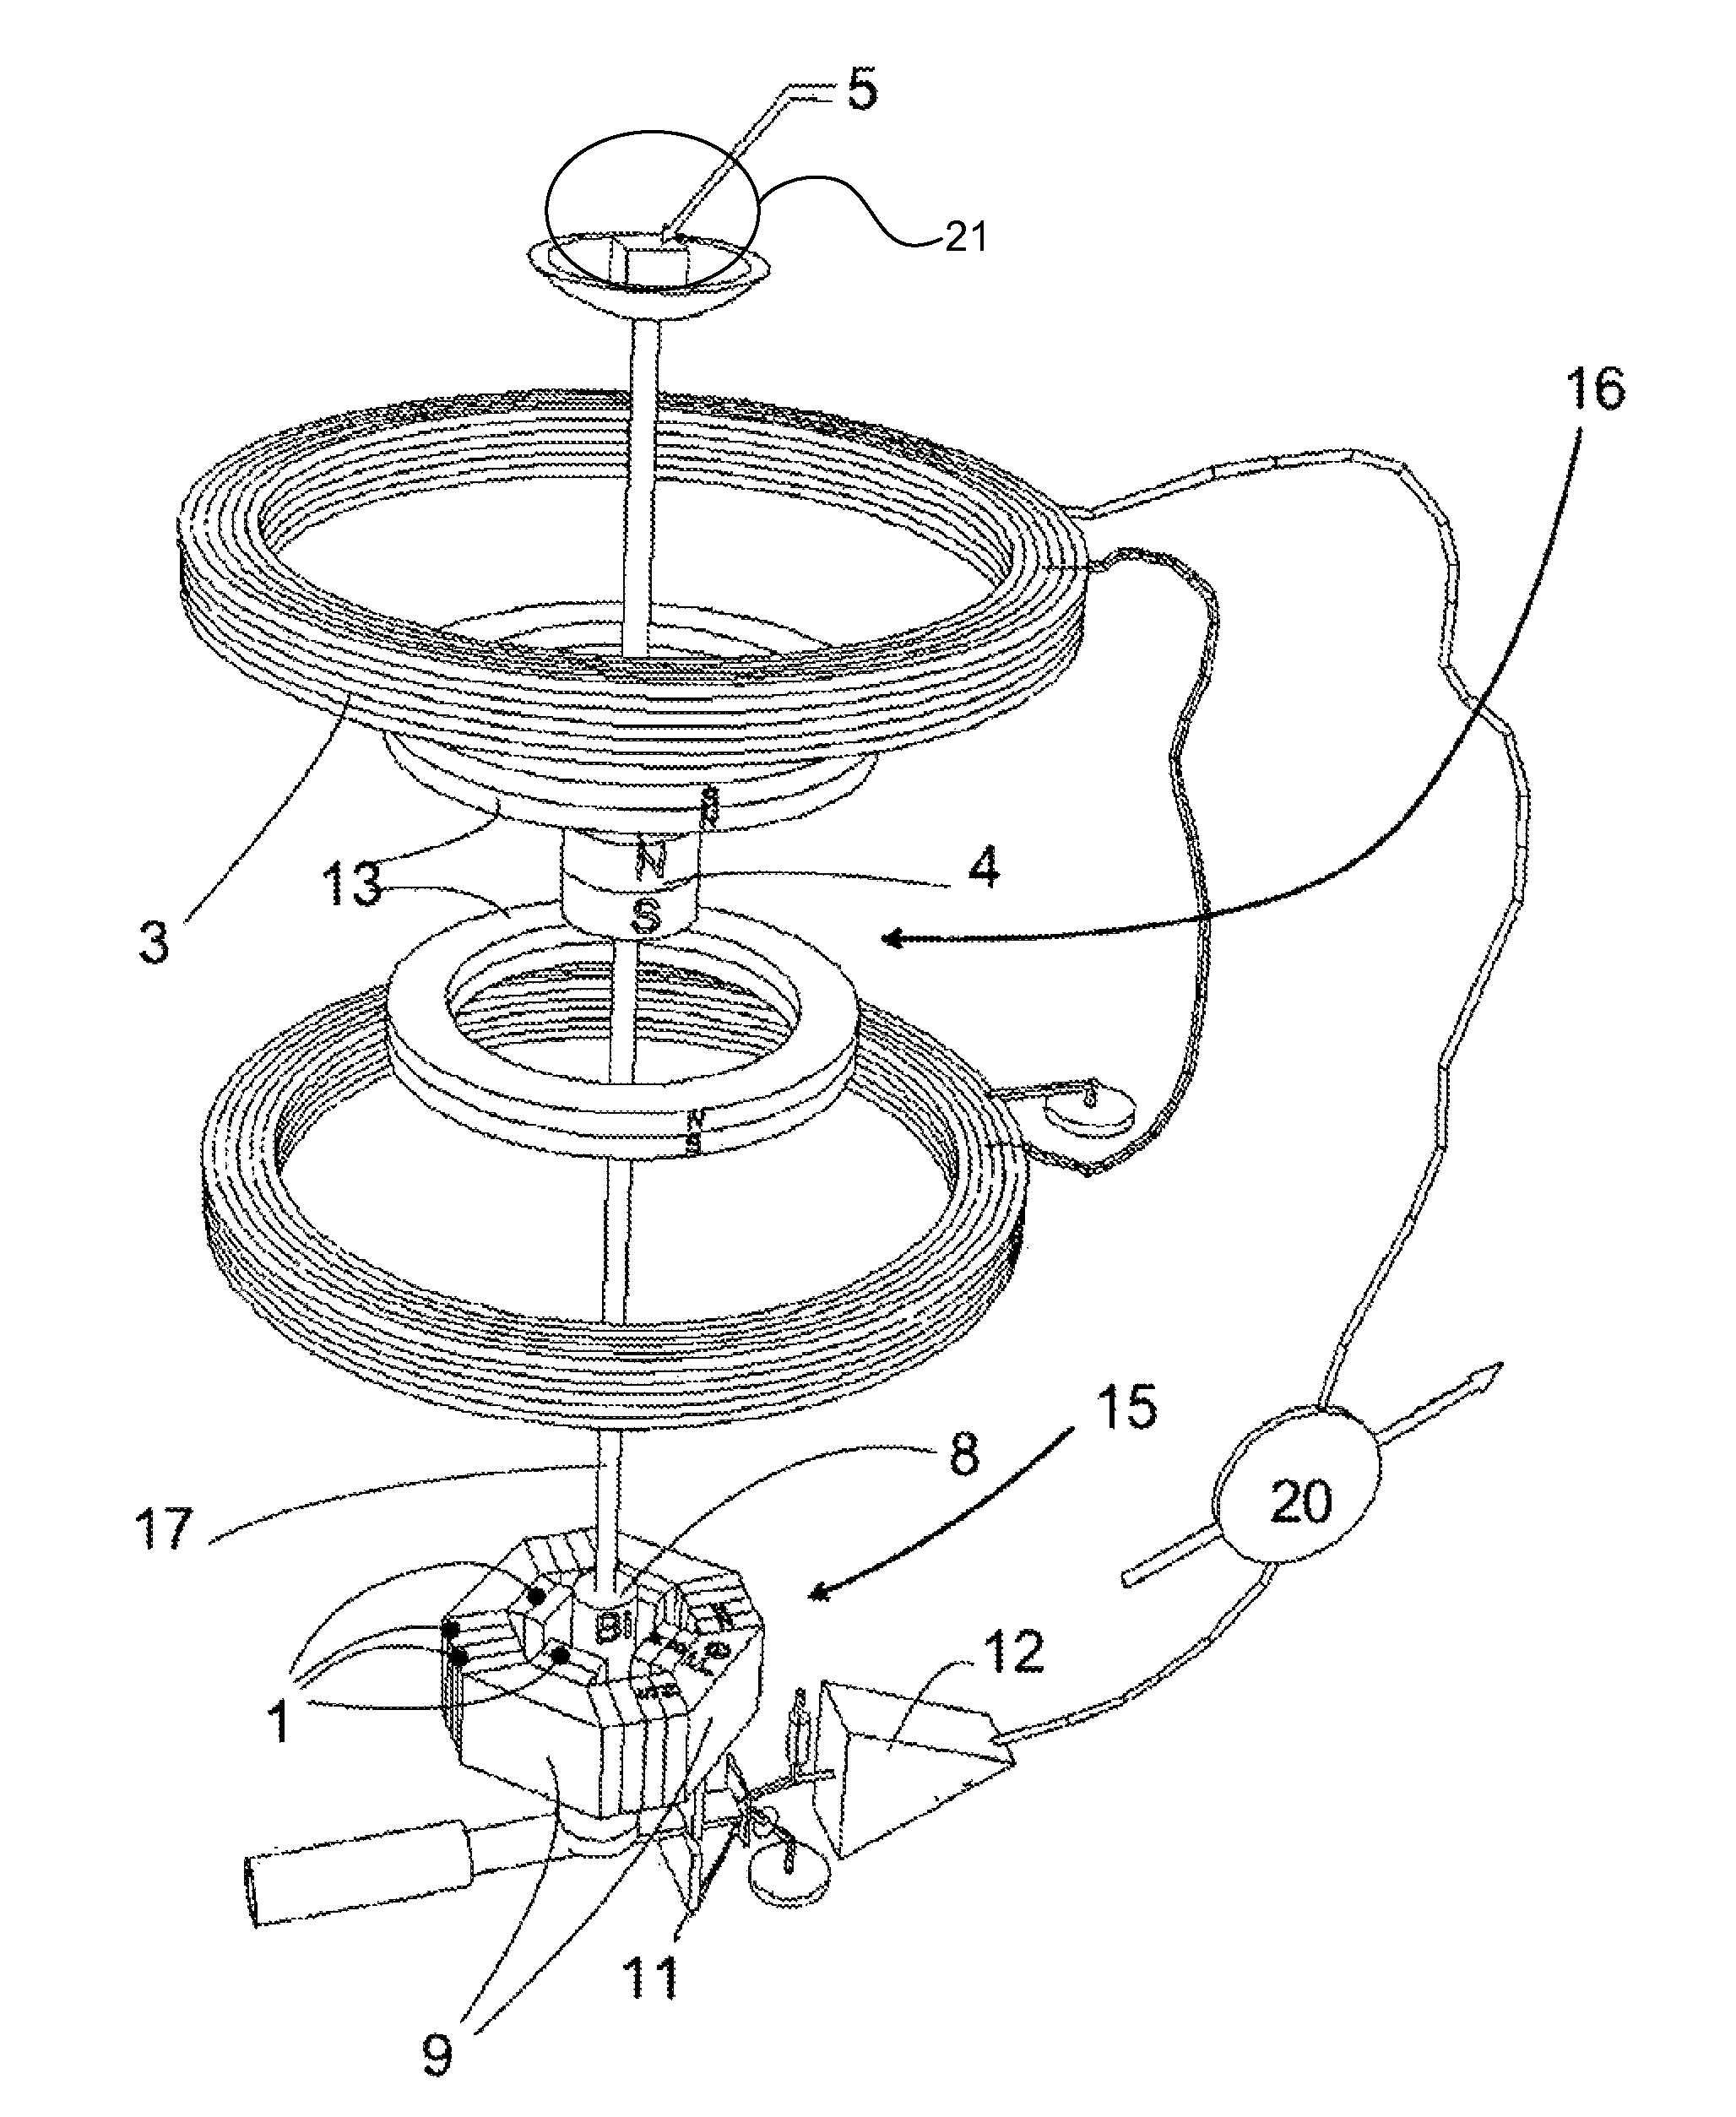 Magnetic levitation system